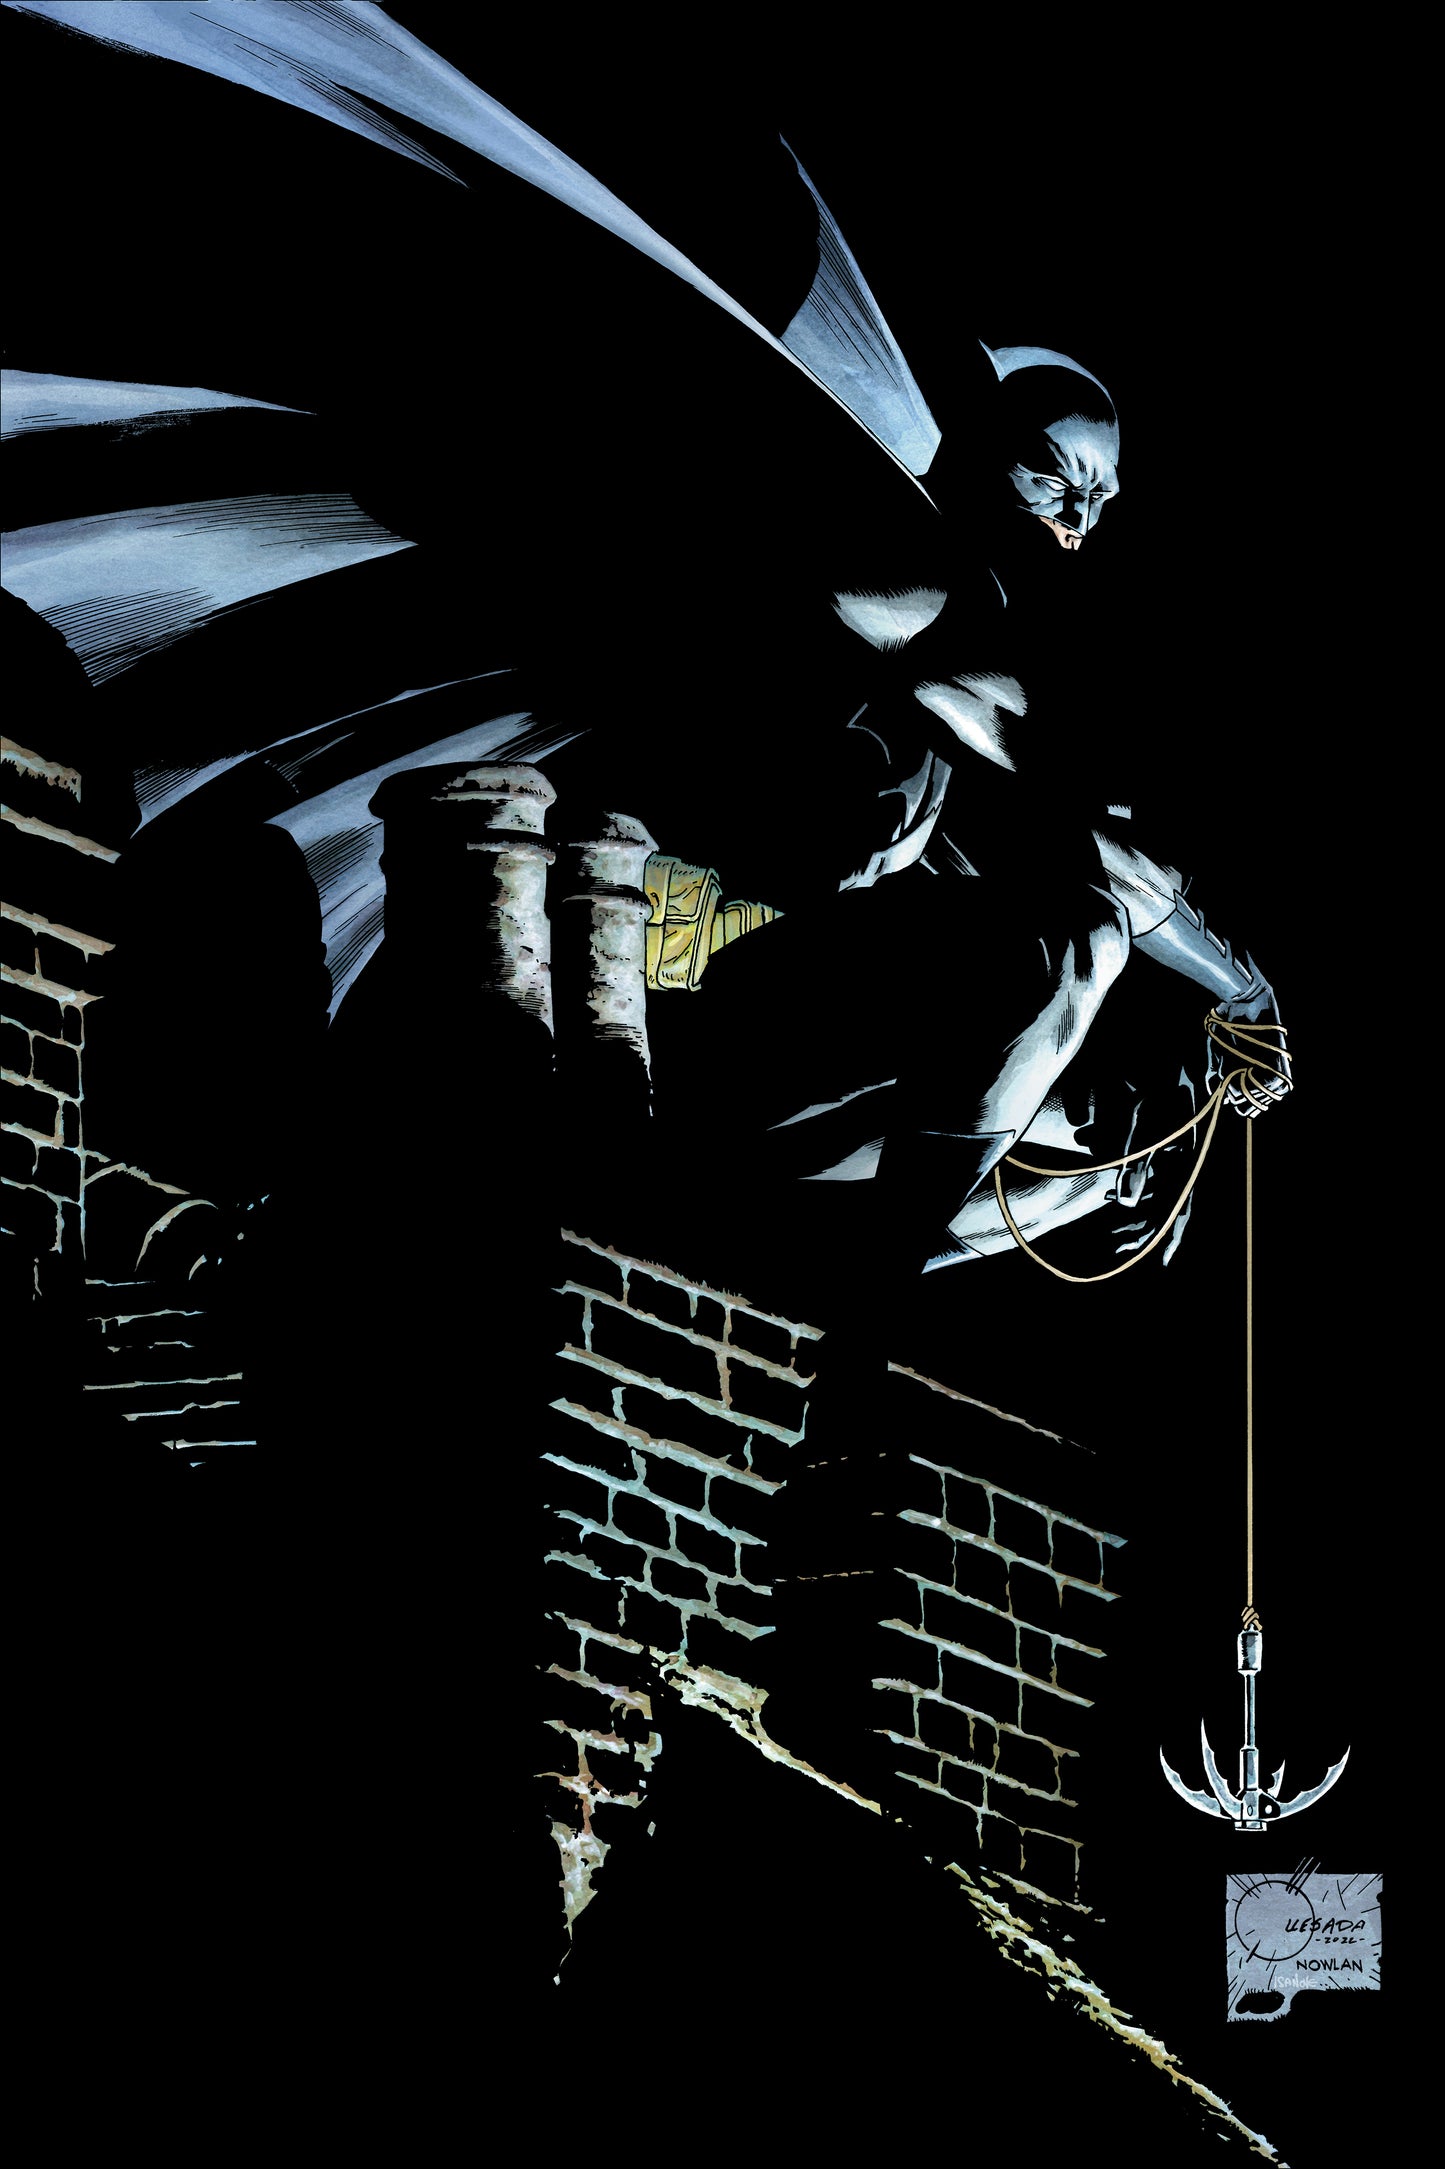 Batman #134